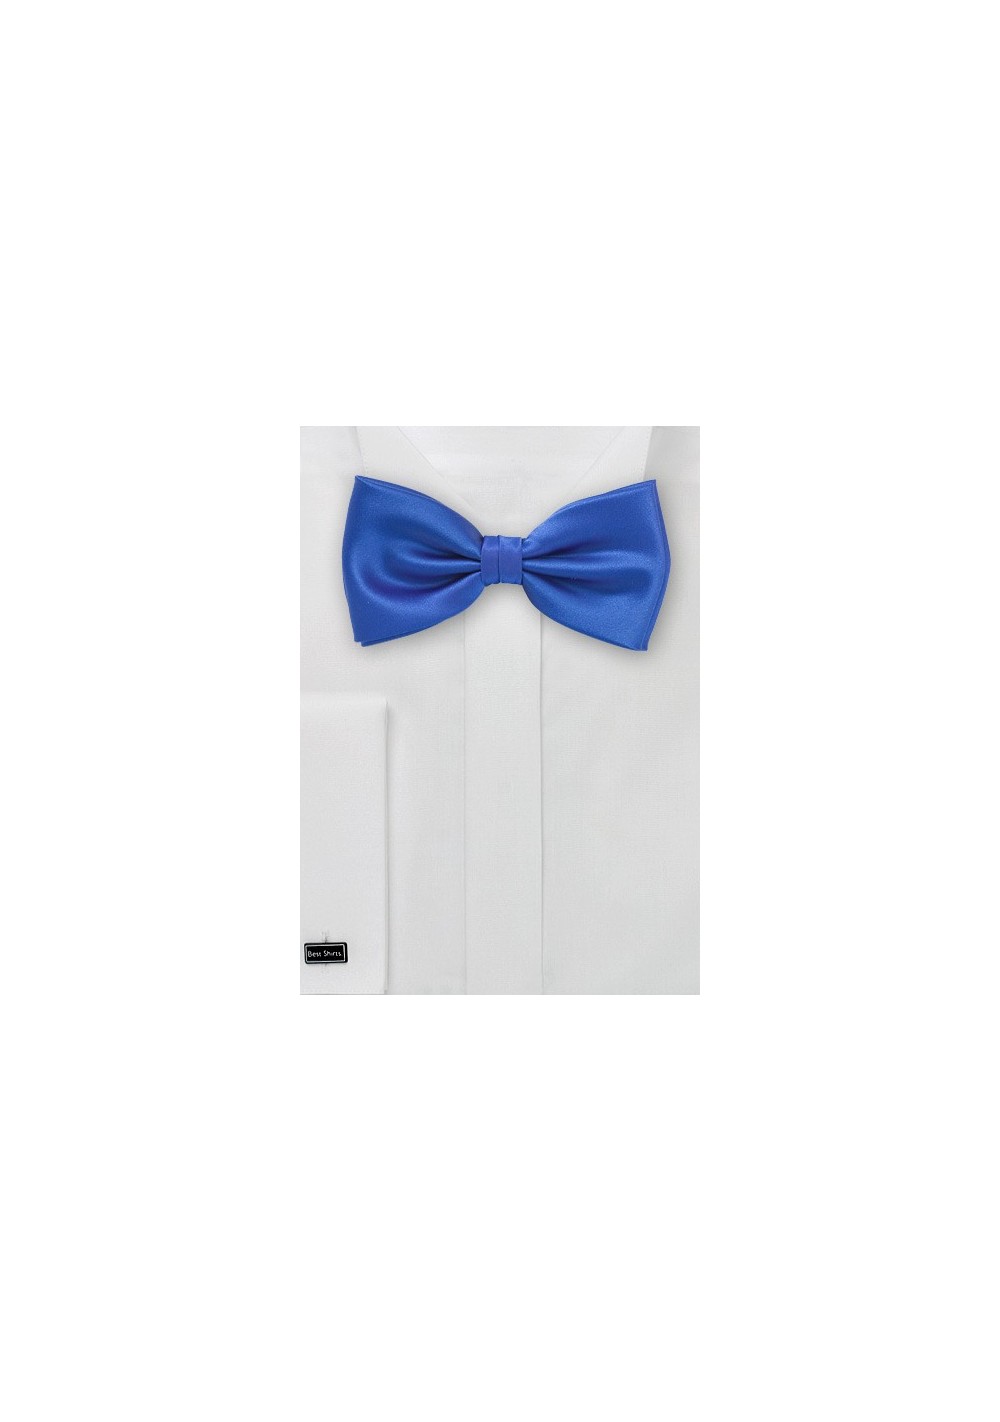 Solid Horizon Blue Bow Tie